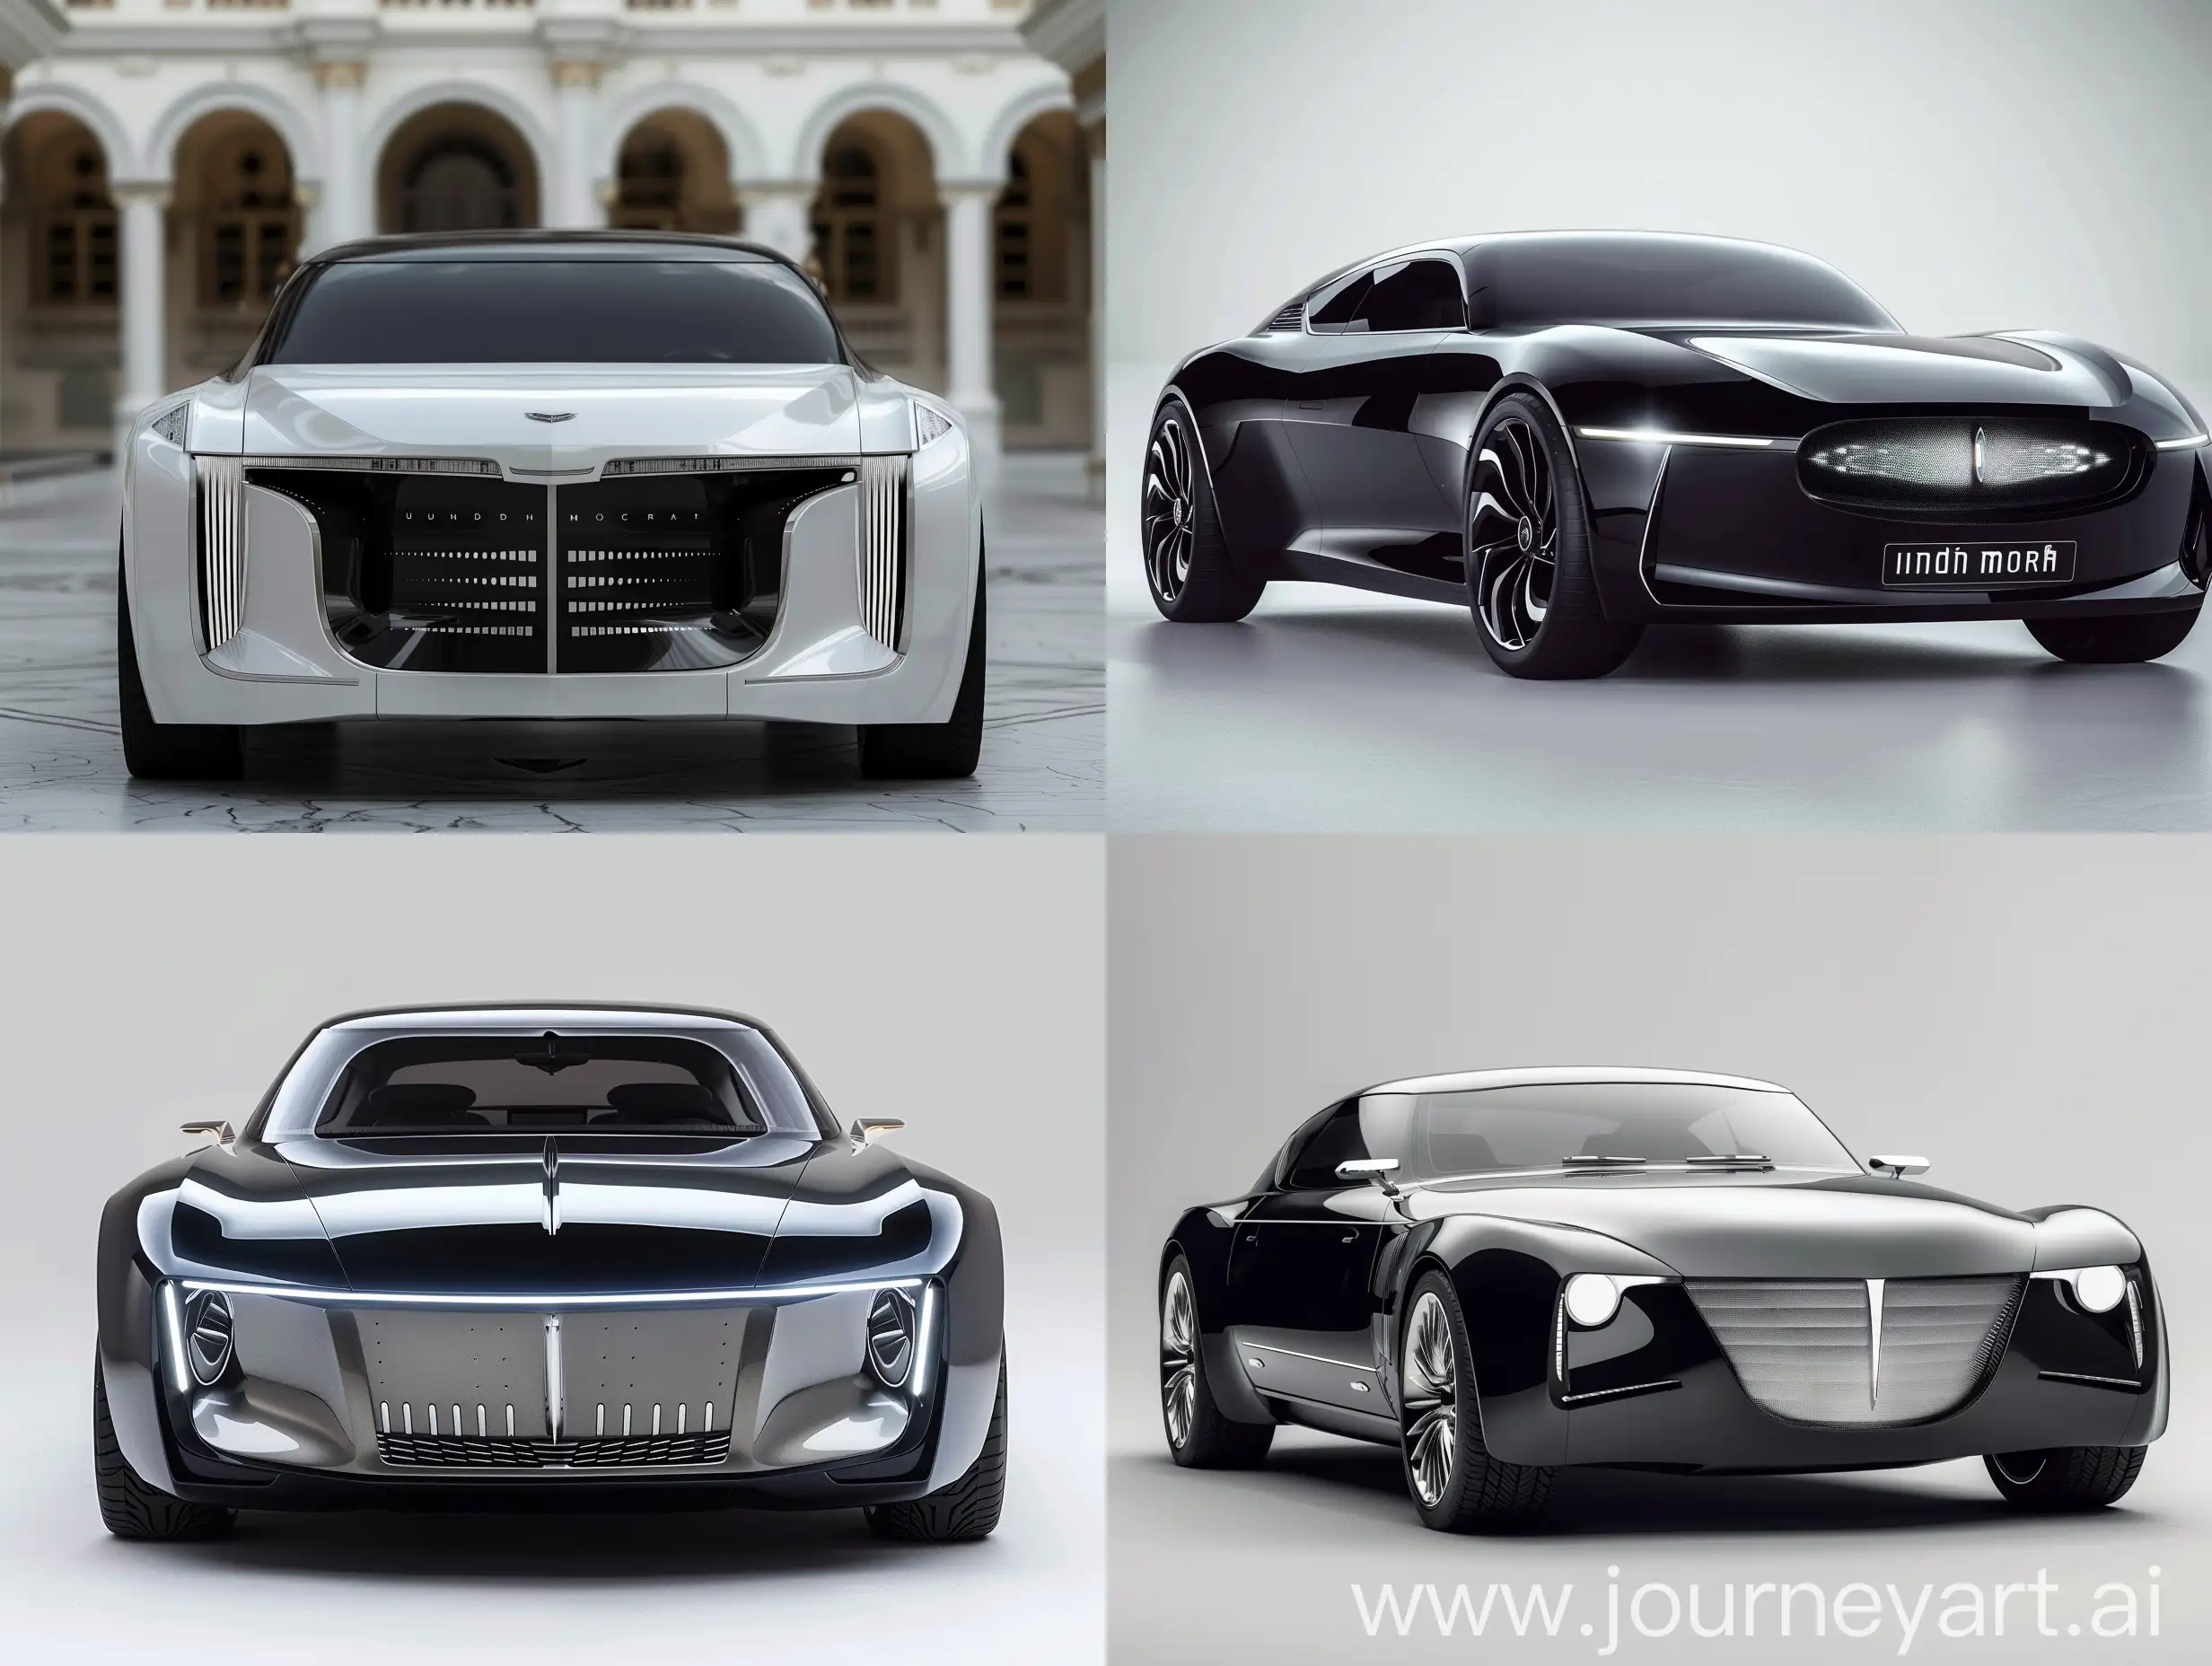 Futuristic-Redesigned-Hindustan-Motors-Ambassador-Sedan-Car-Front-View